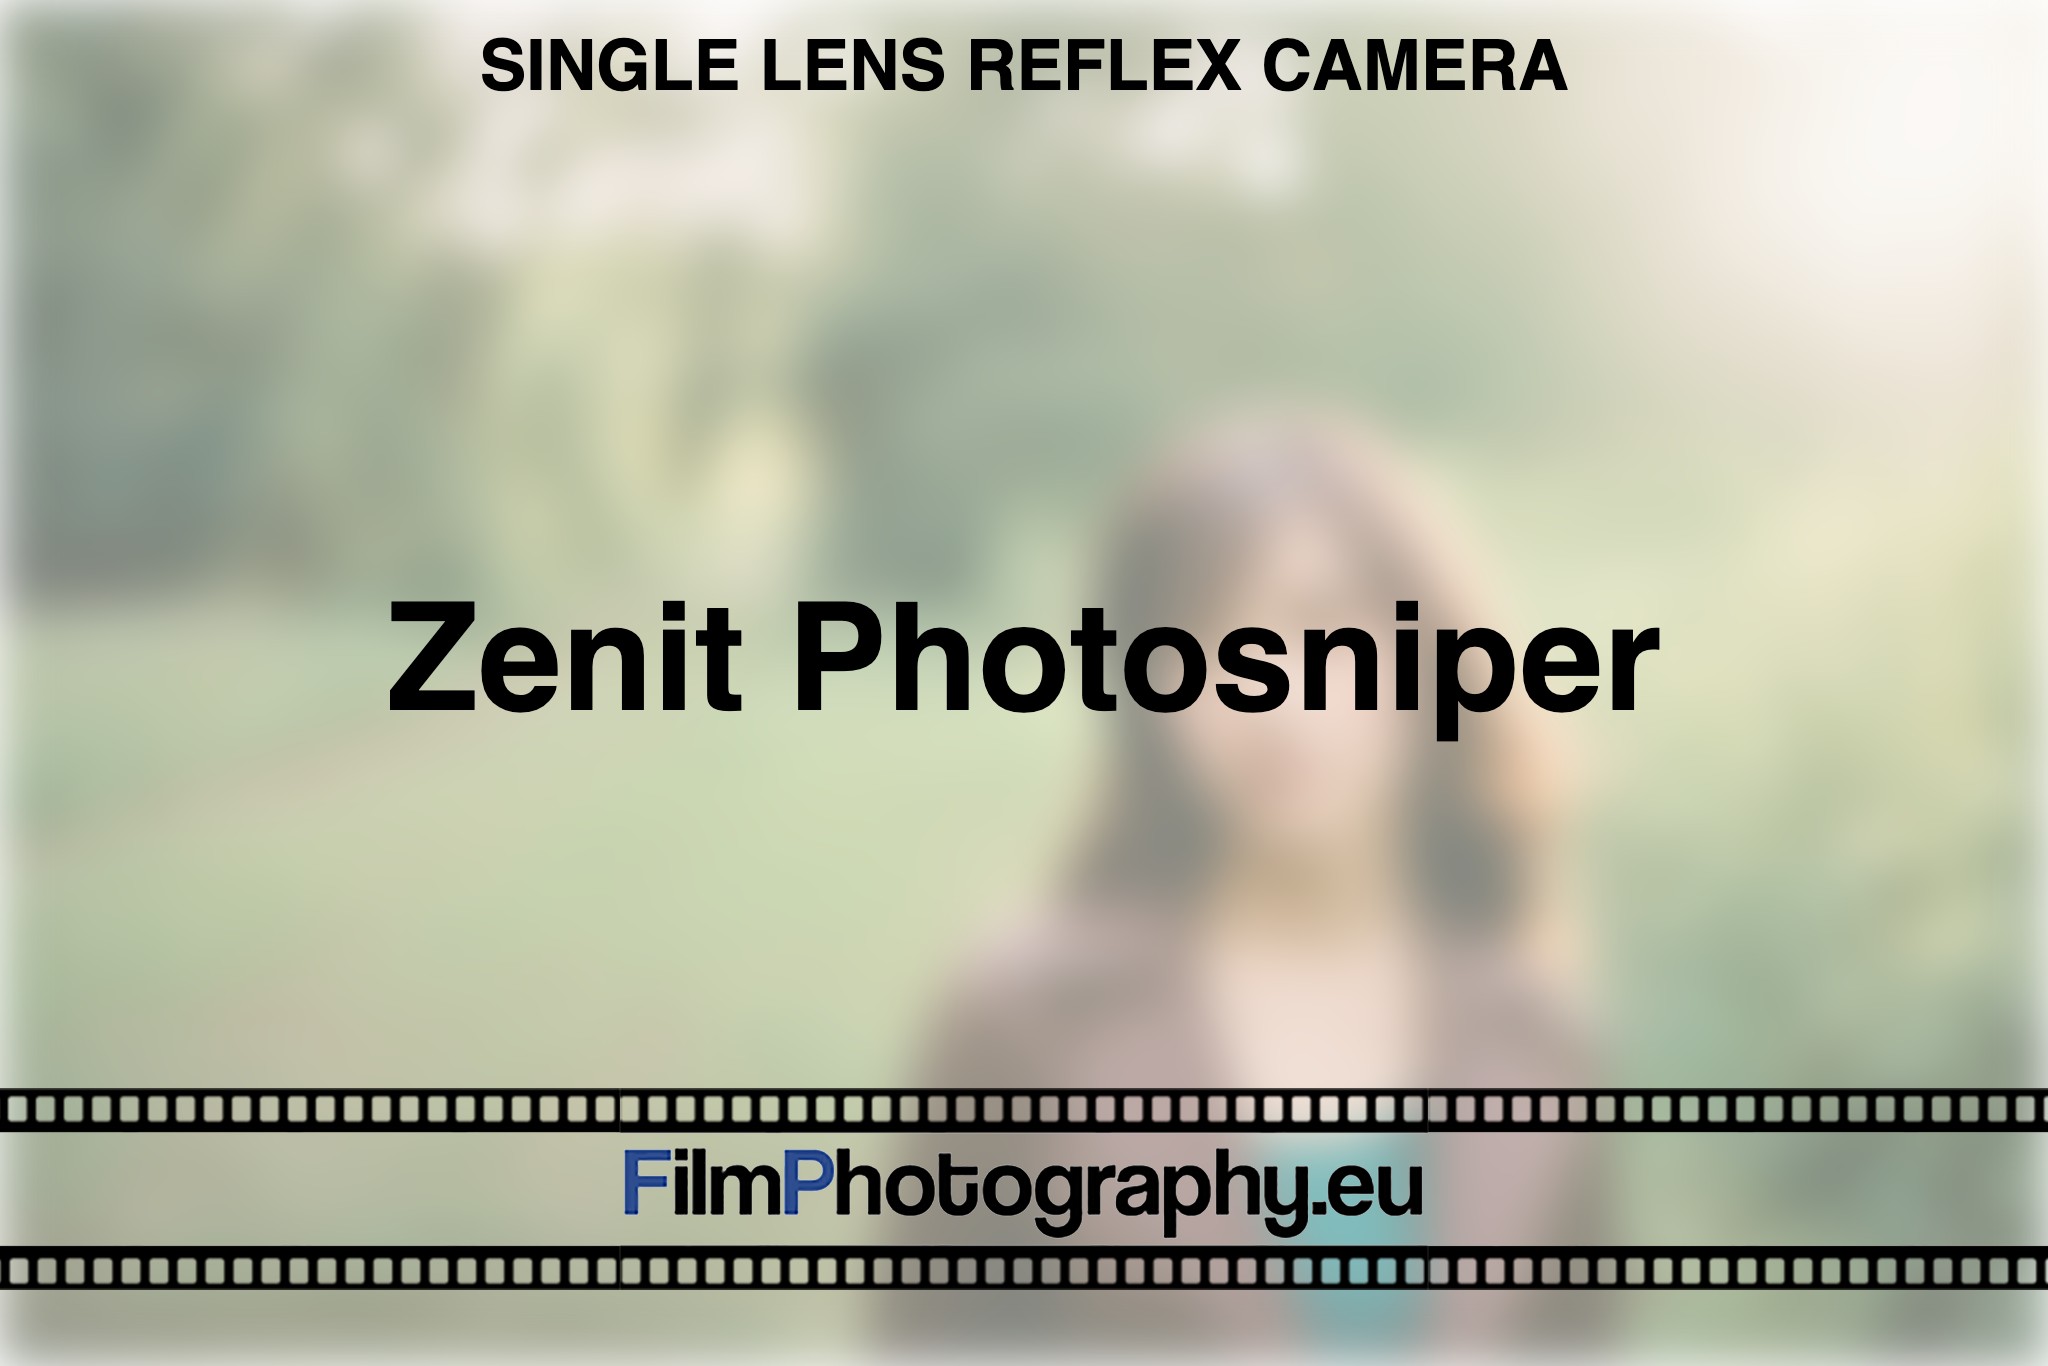 zenit-photosniper-single-lens-reflex-camera-bnv